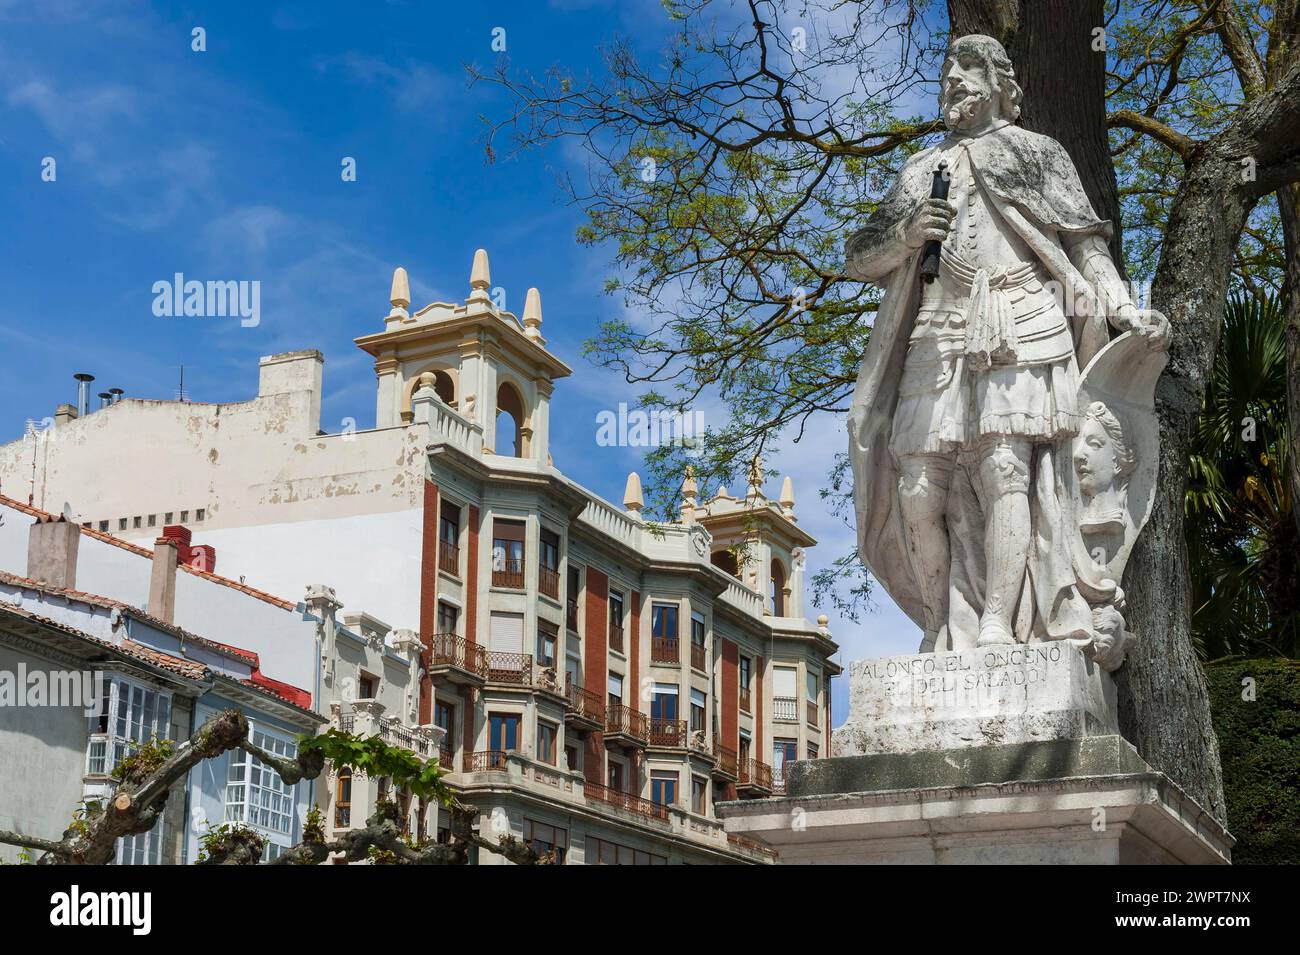 Denkmal, Altstadt, Denkmal, Reisen, Tourismus, Städtereise, Burgos, Spanien Stockfoto